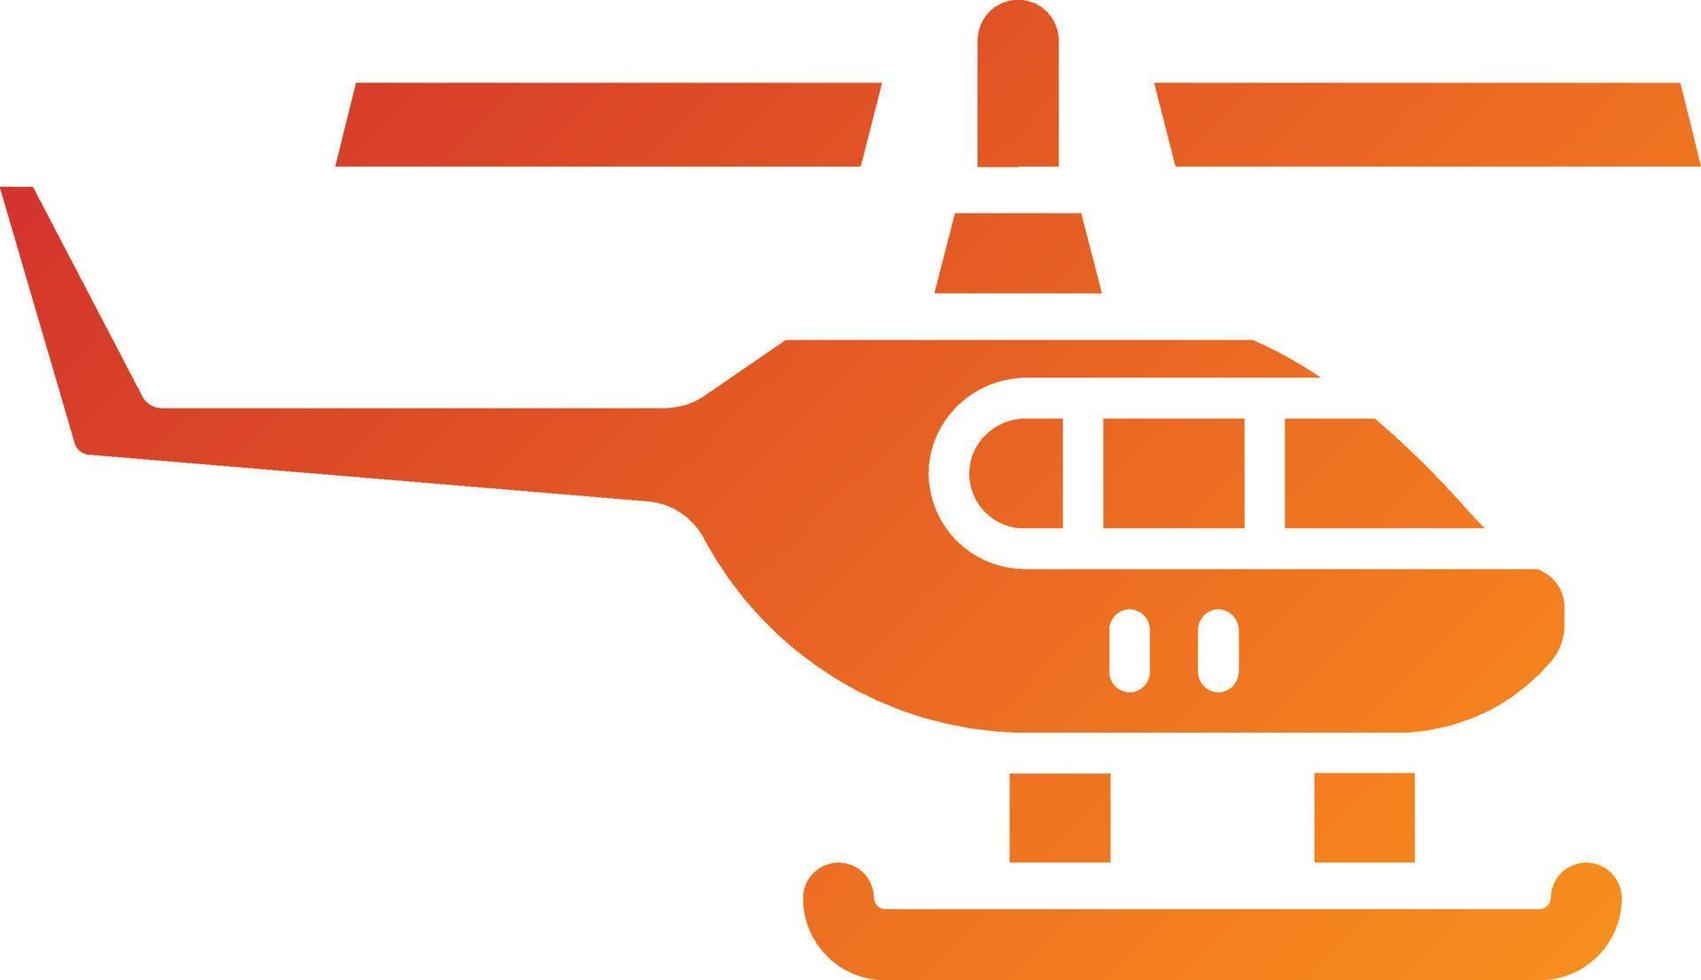 Armee-Hubschrauber-Symbol-Stil vektor